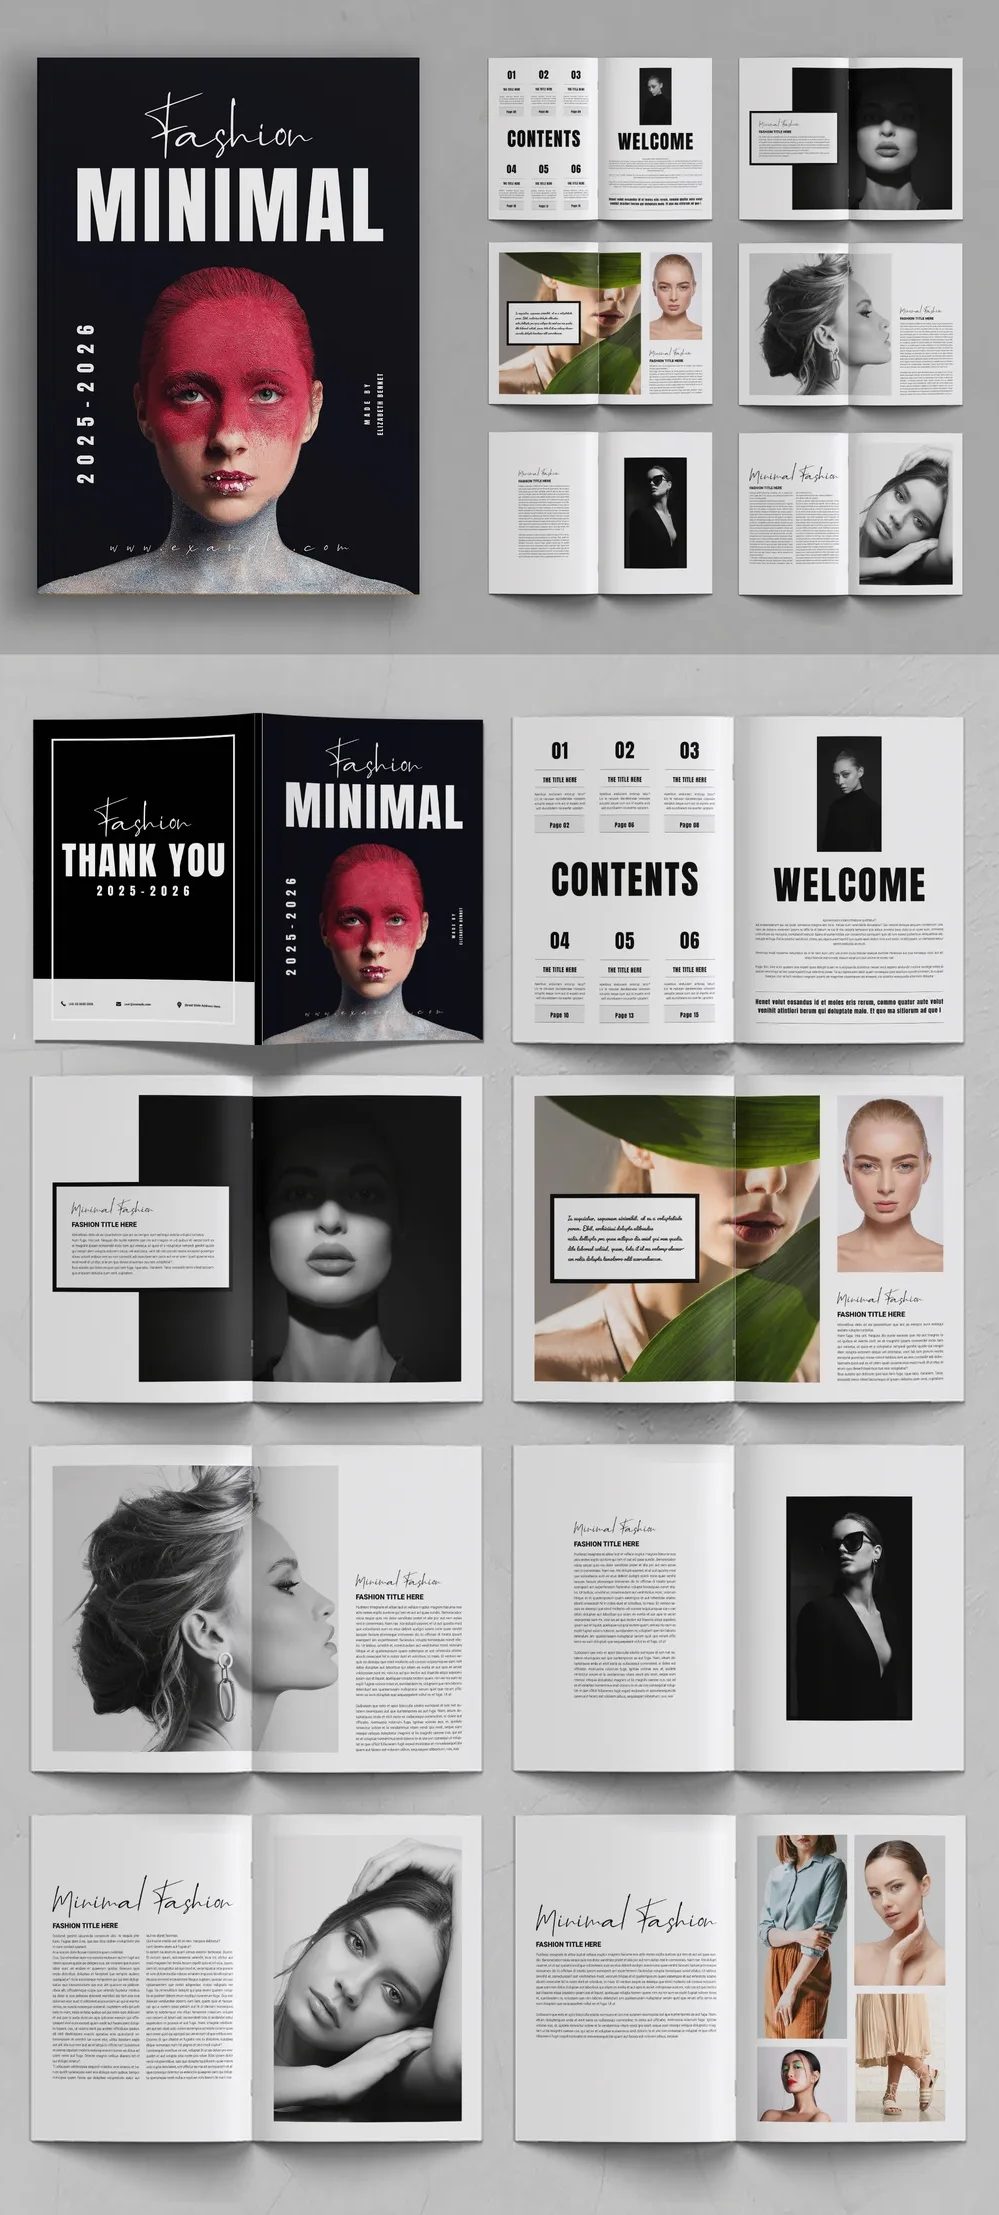 Adobestock - Minimal Magazine Design 725282105